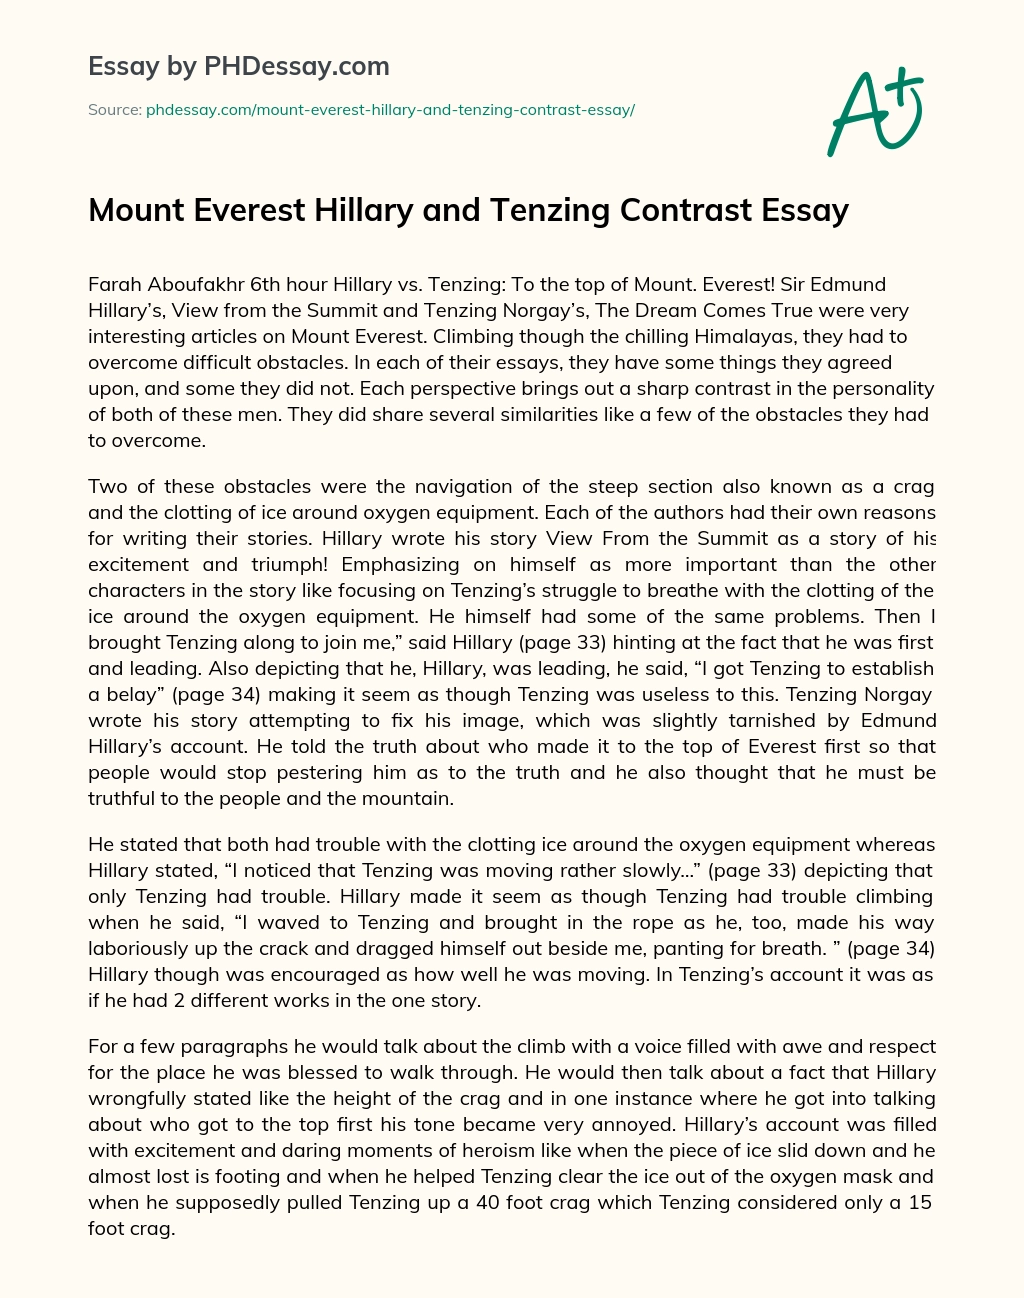 Mount Everest Hillary and Tenzing Contrast Essay essay